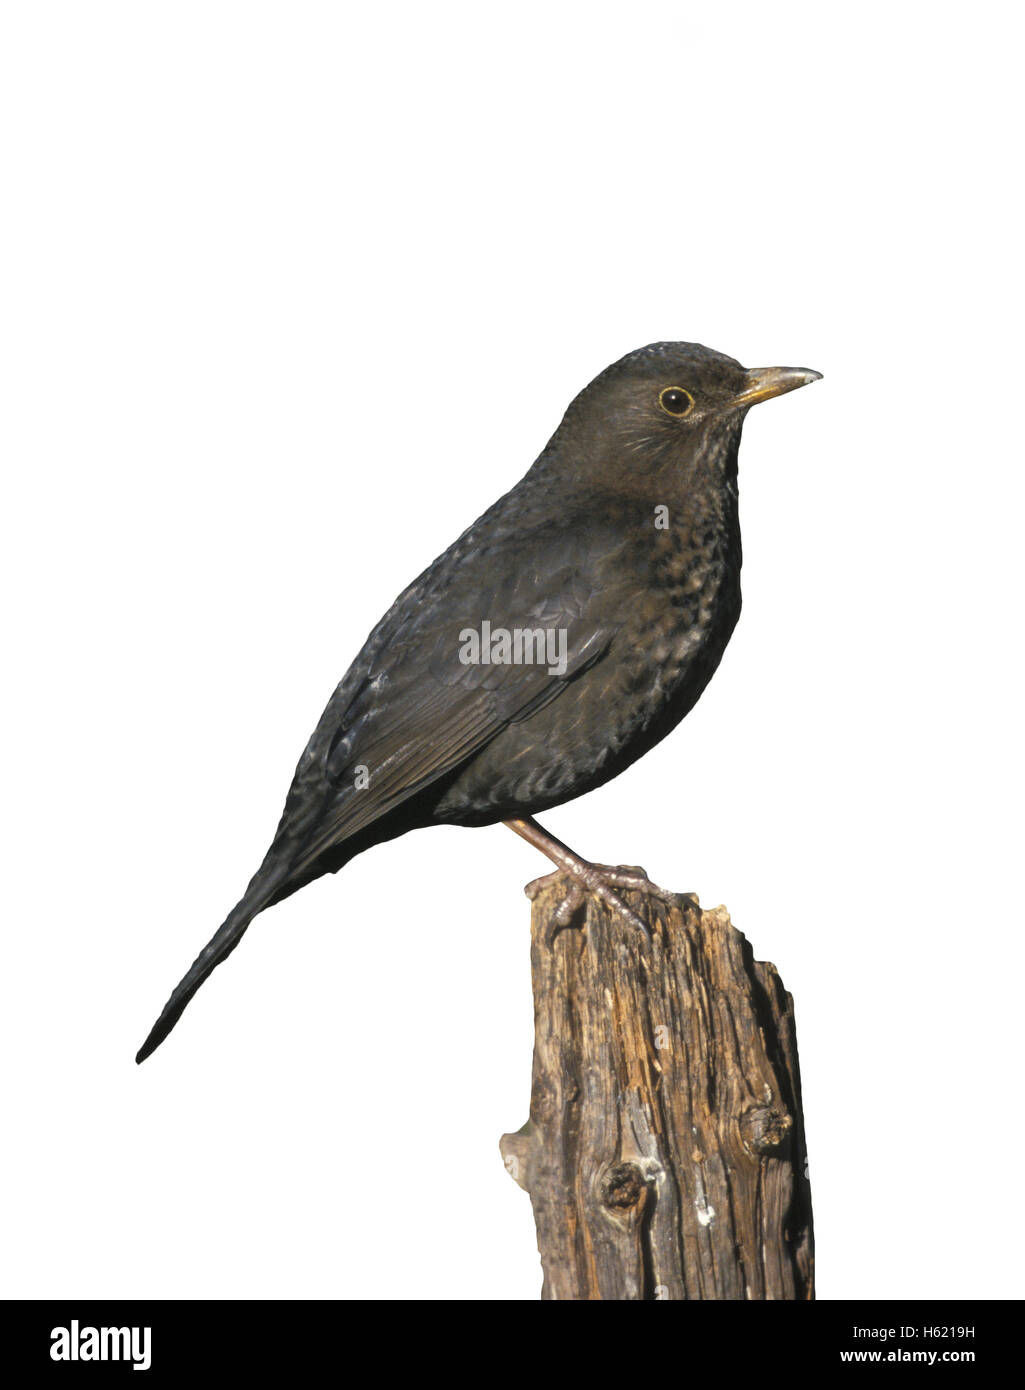 Merlo, Turdus merula, singolo uccello sul log Foto Stock